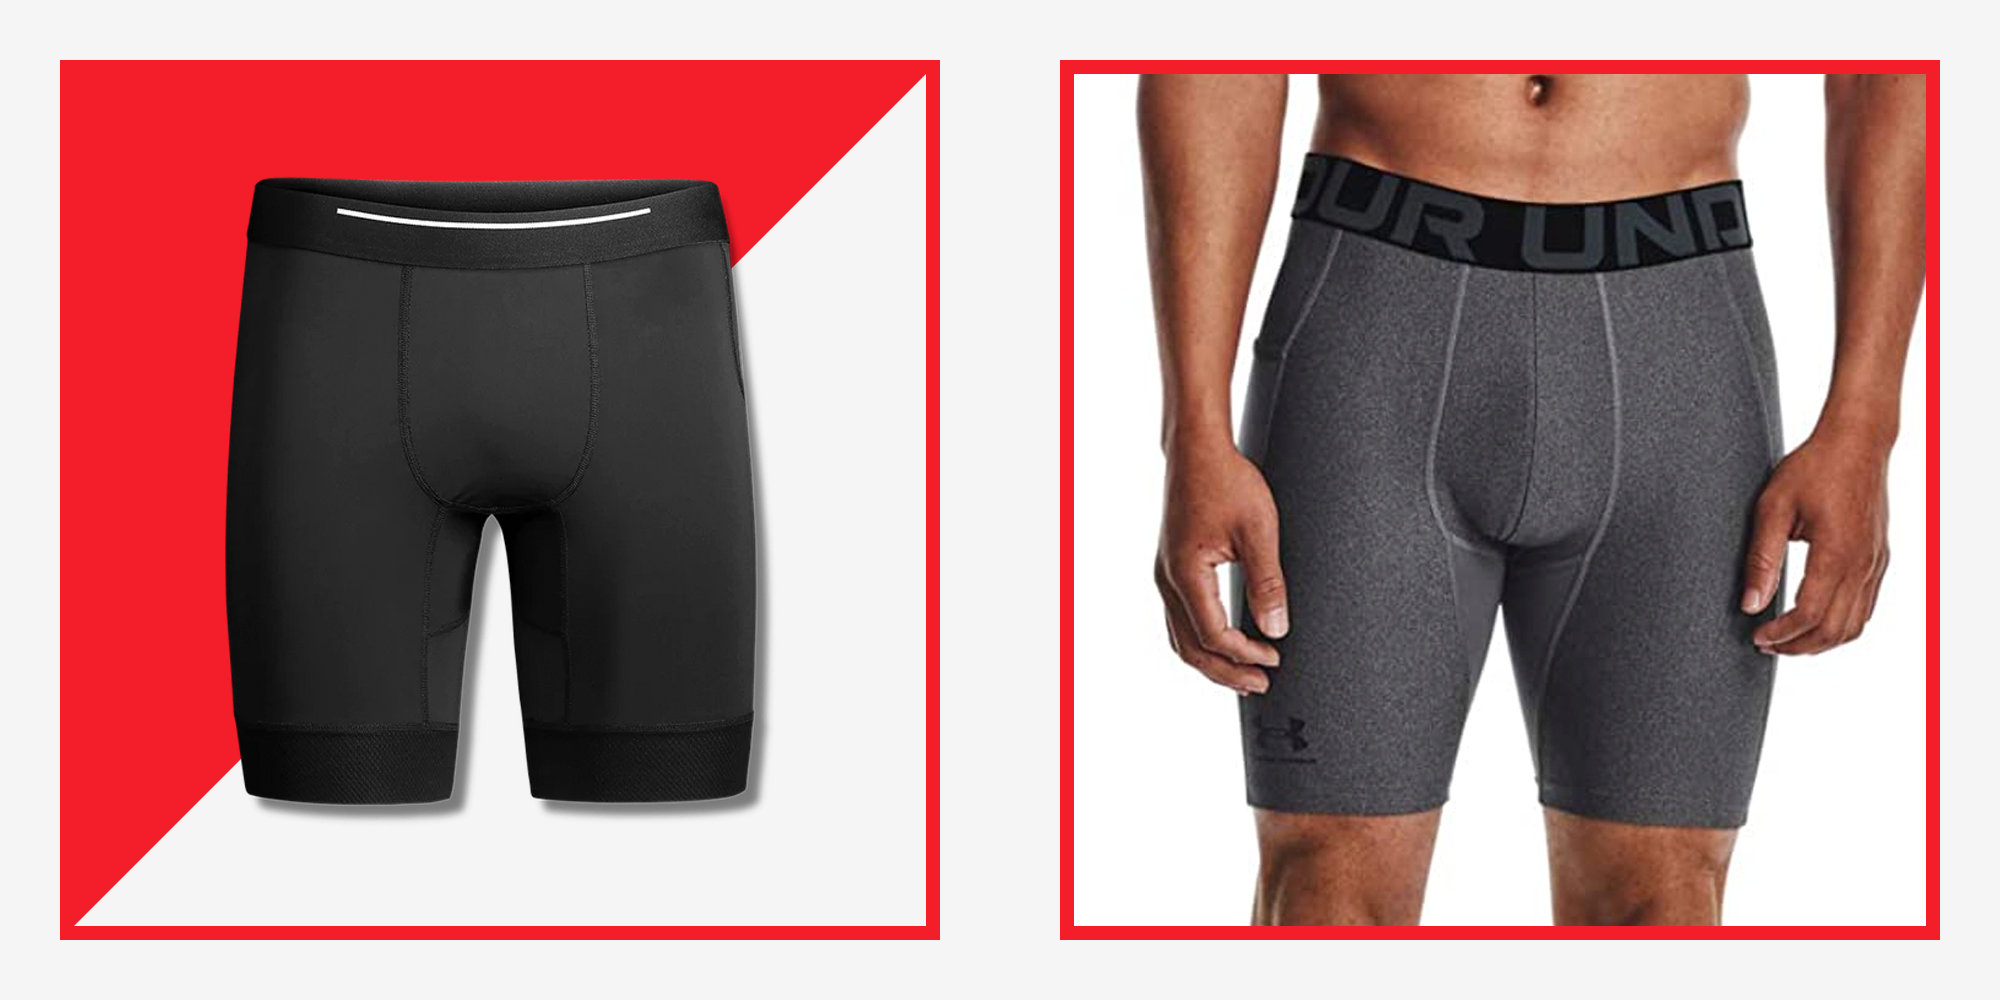 Runhit Compression Shorts for Men,Mens Underwear Spandex Shorts Workout Running 